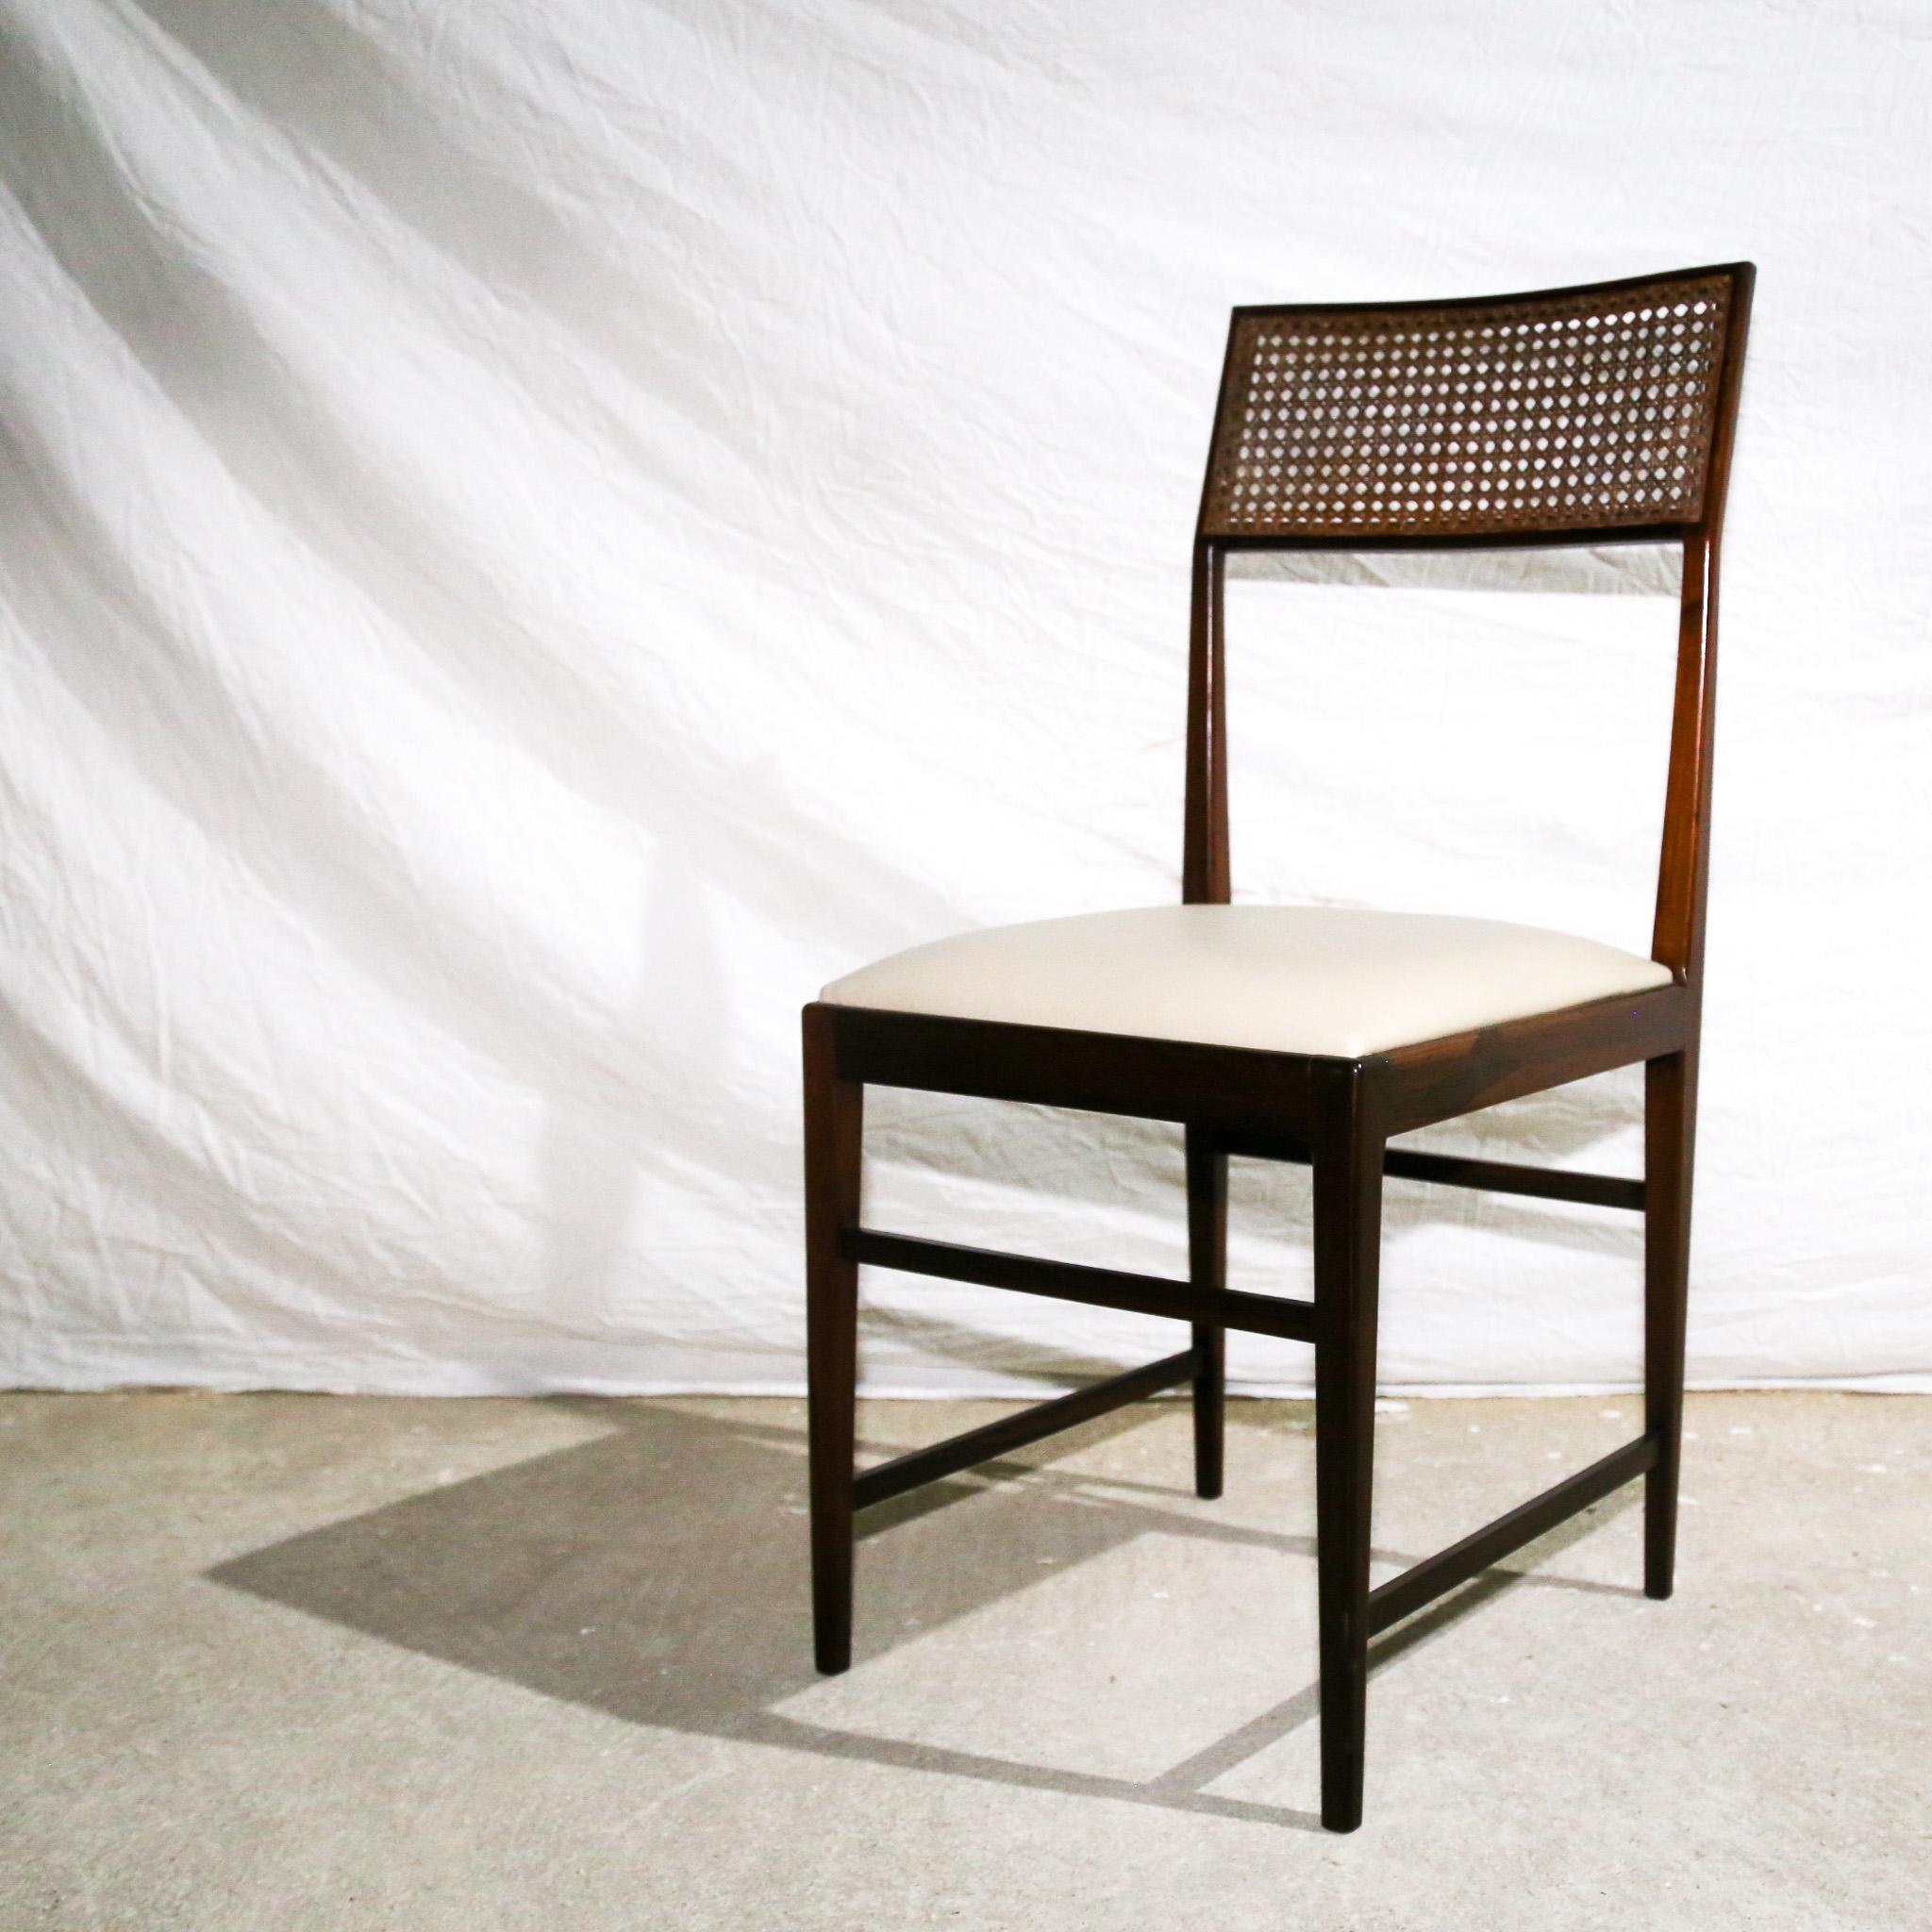 Brazilian Modern 4 Chair Set in Hardwood, Cane, Leather, Joaquim Tenreiro 1950s For Sale 7